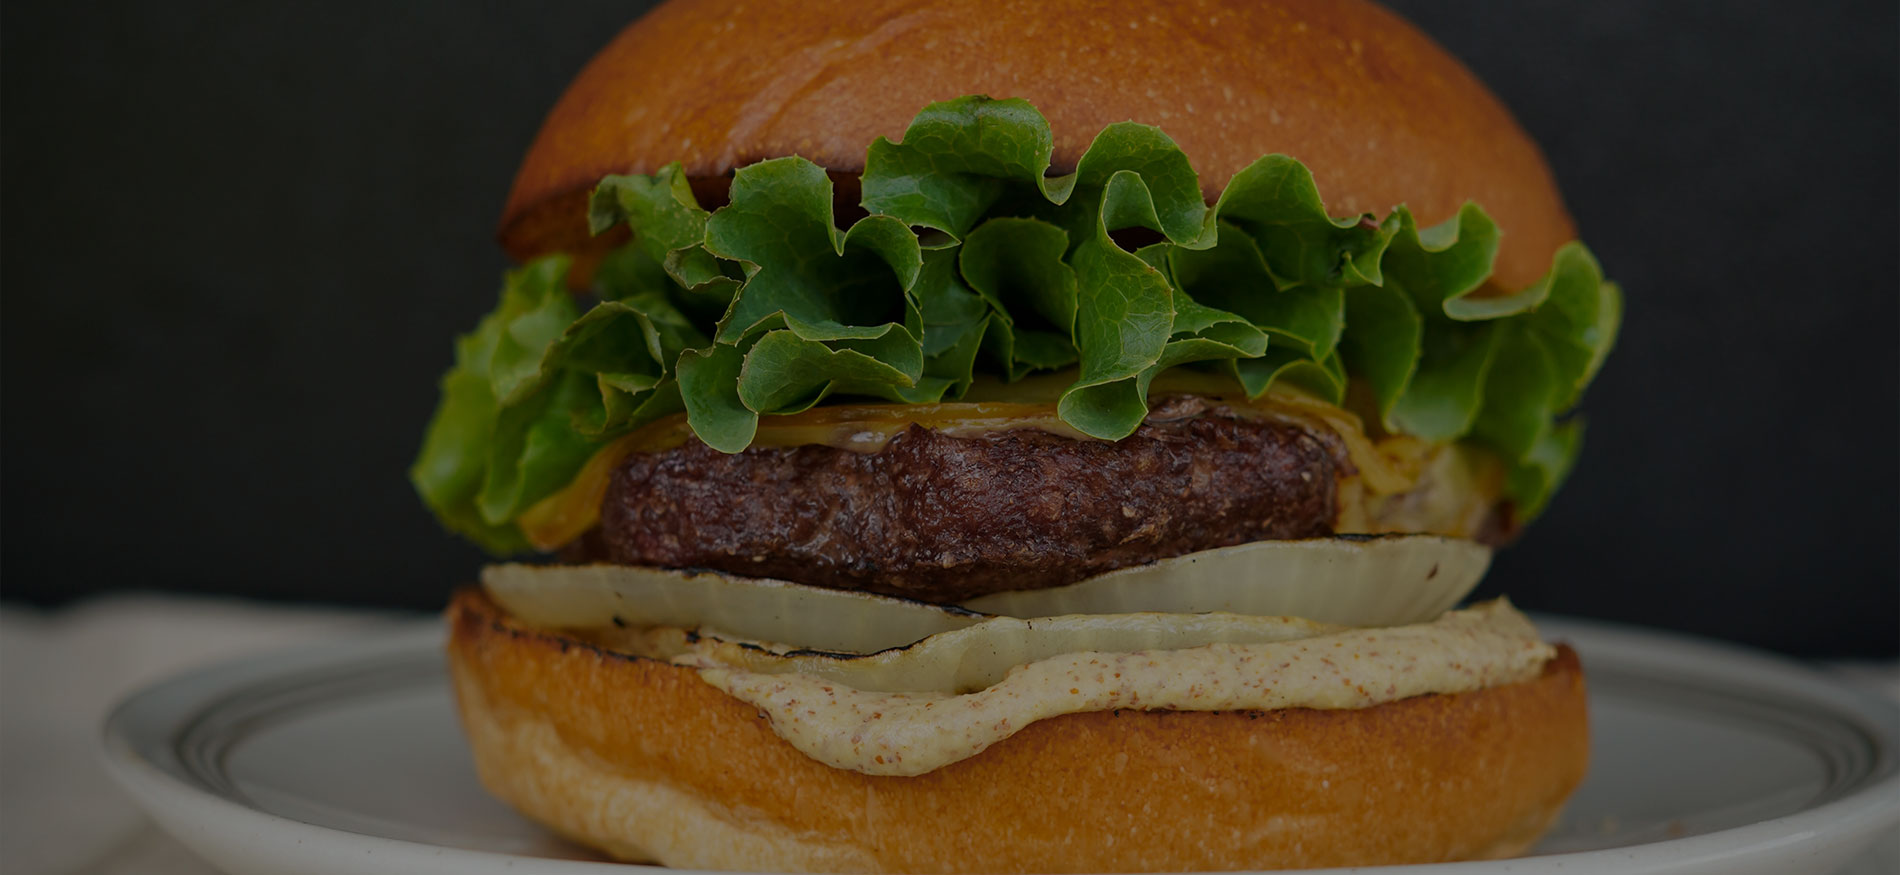 https://bubbafoods.com/wp-content/uploads/2022/08/Smoked-Gouda-Grass-Fed-BUBBA-Burger-hero-image.jpg